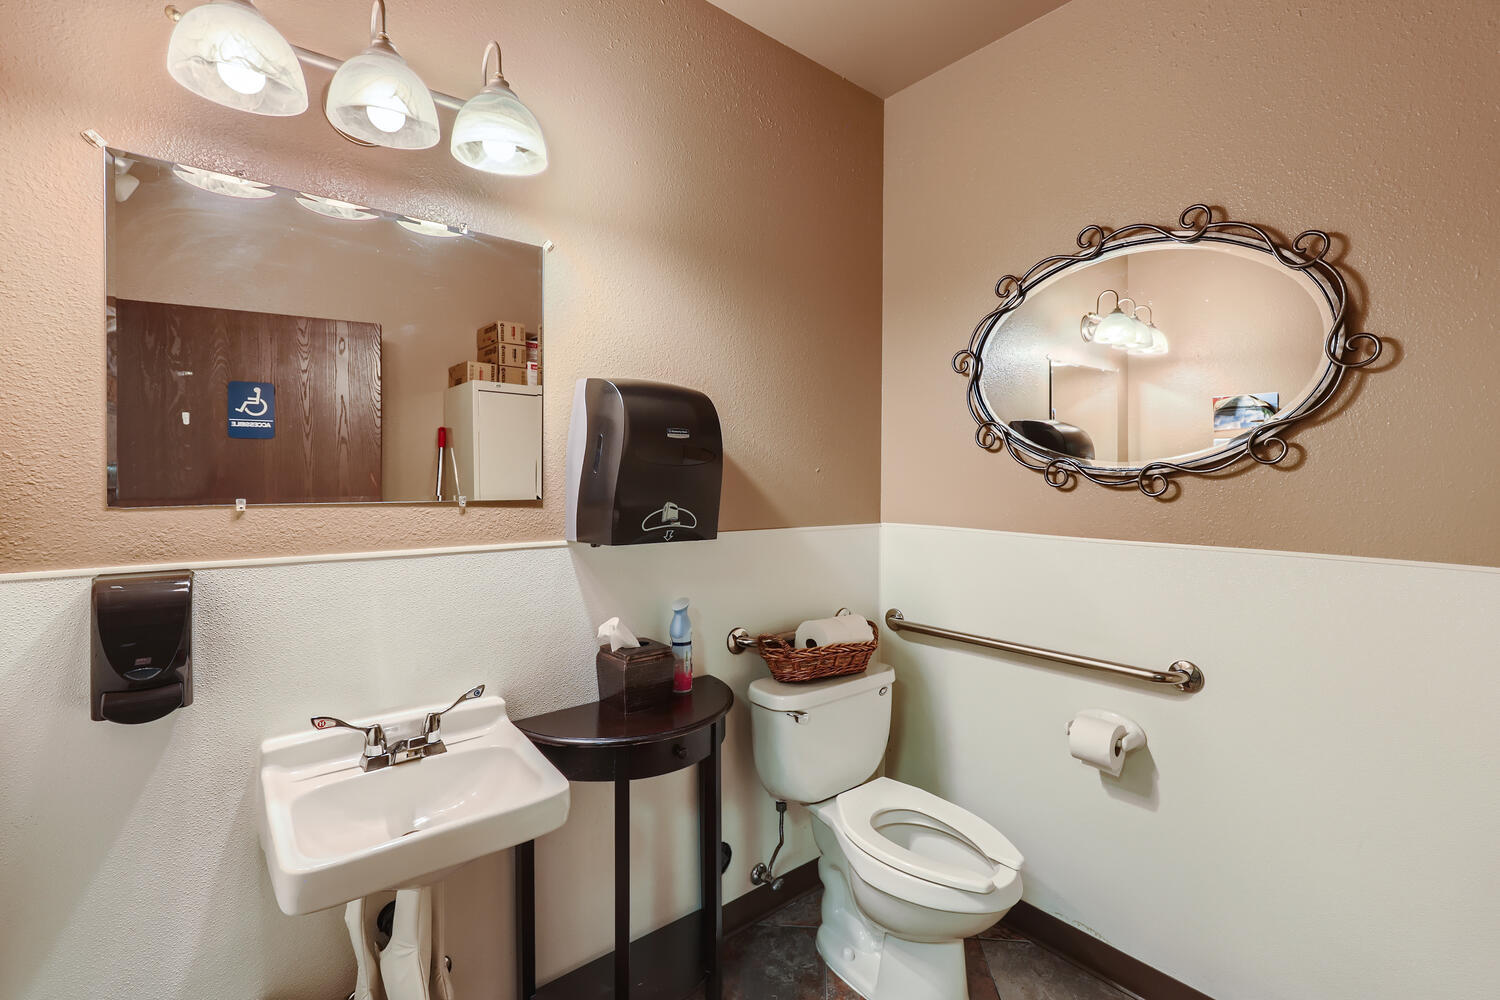 Clean and comfortable bathroom facilities